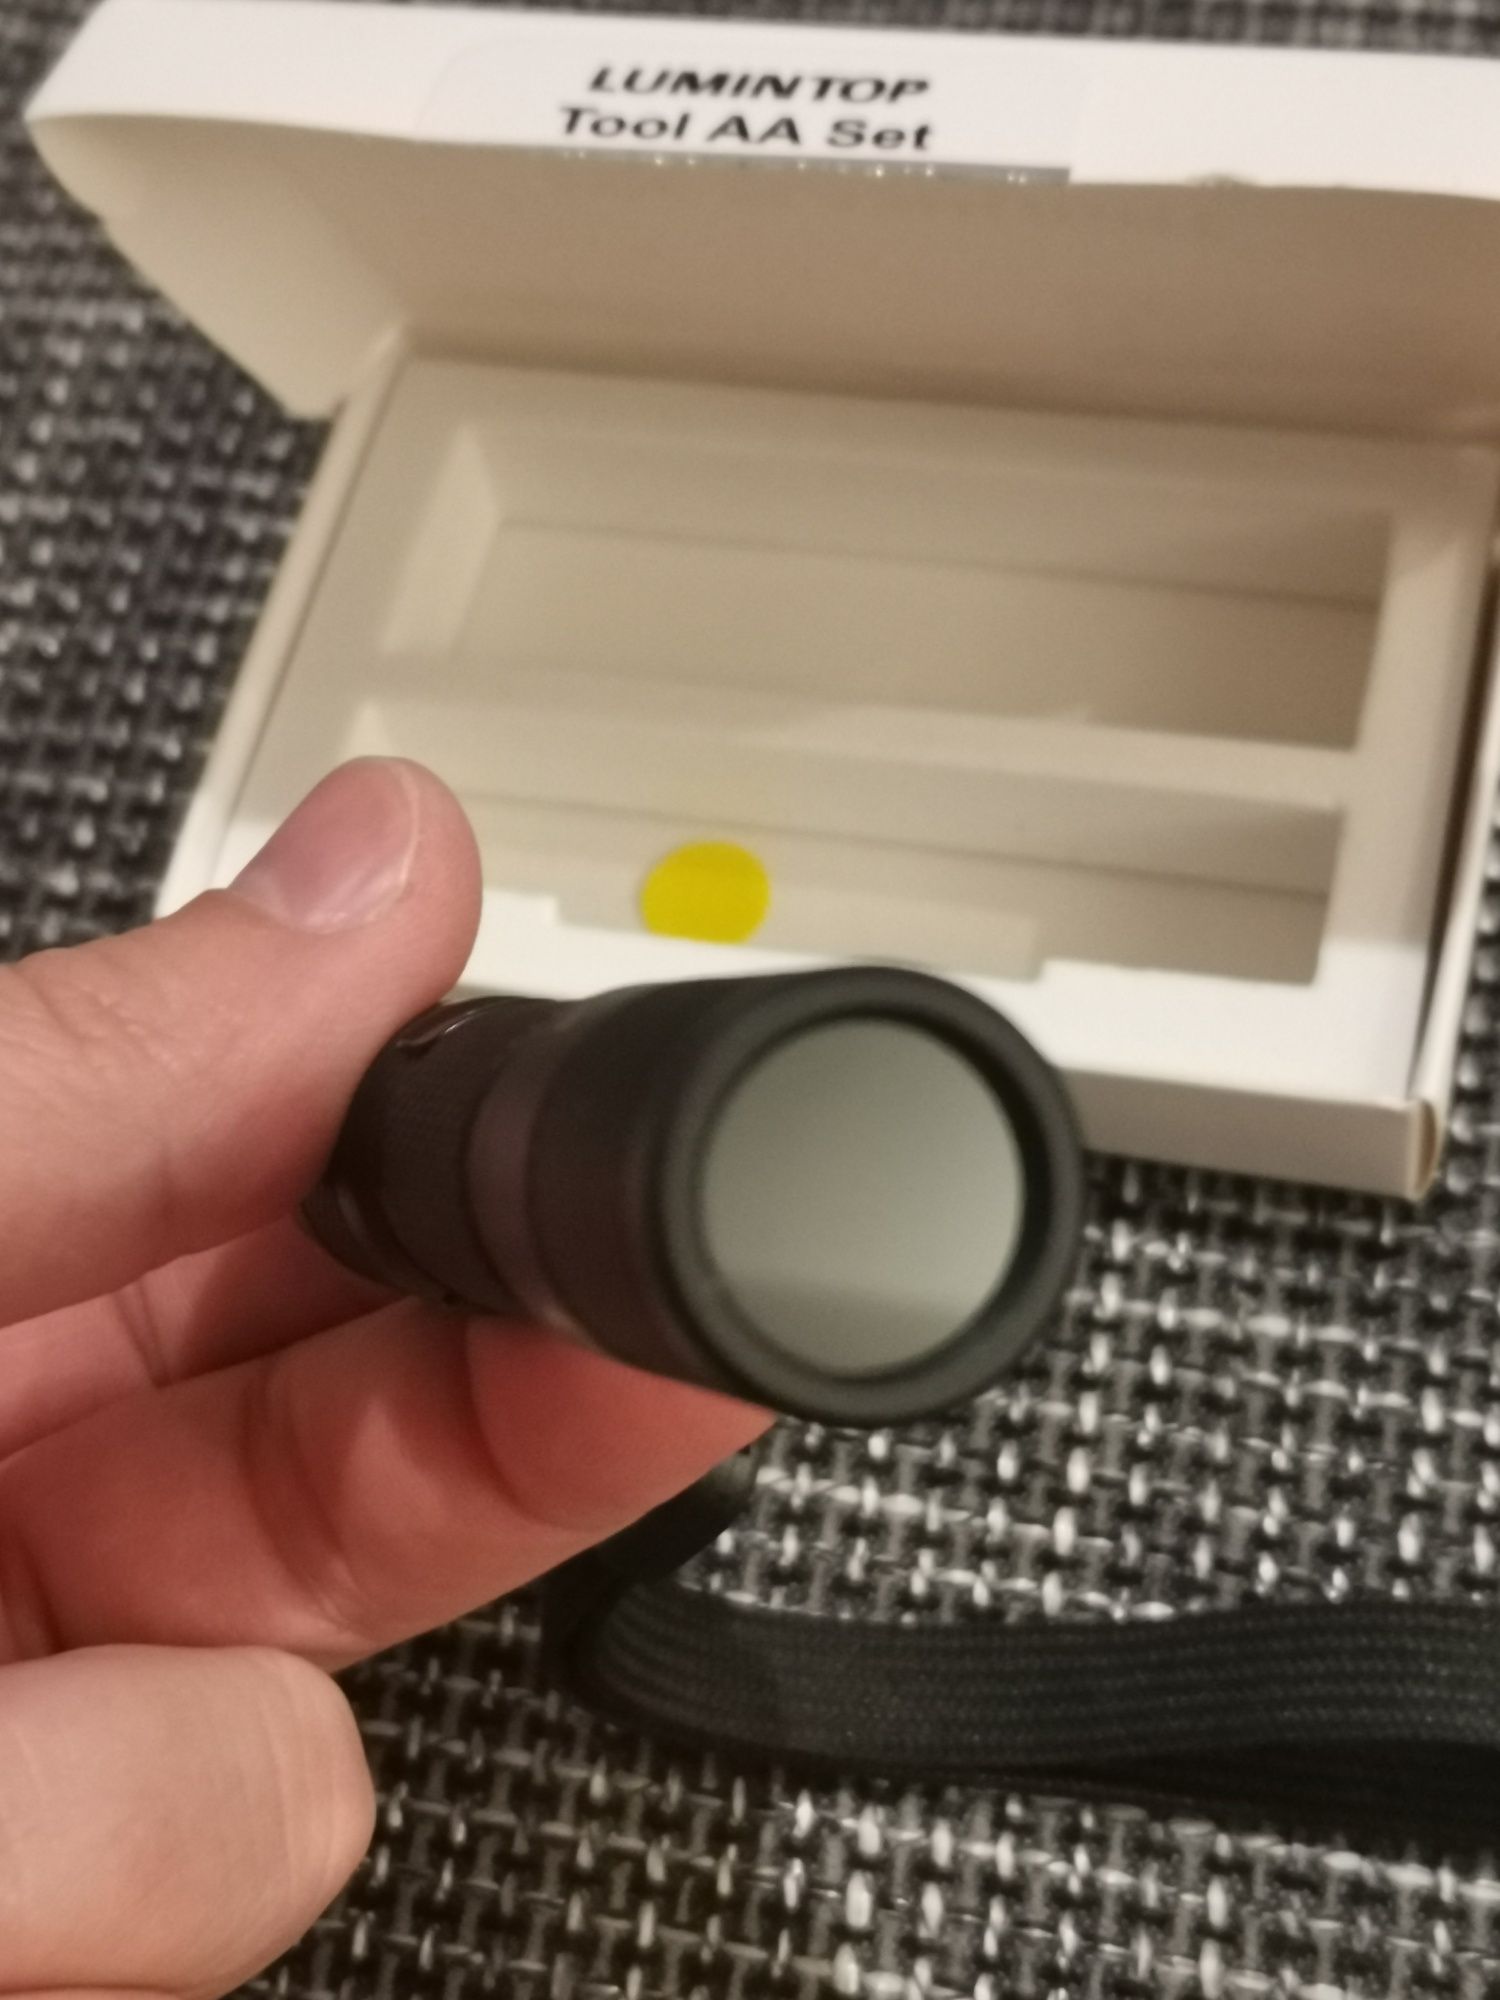 Lumintop Tool AA UV - lanterna UV 365 nm, pachet complet